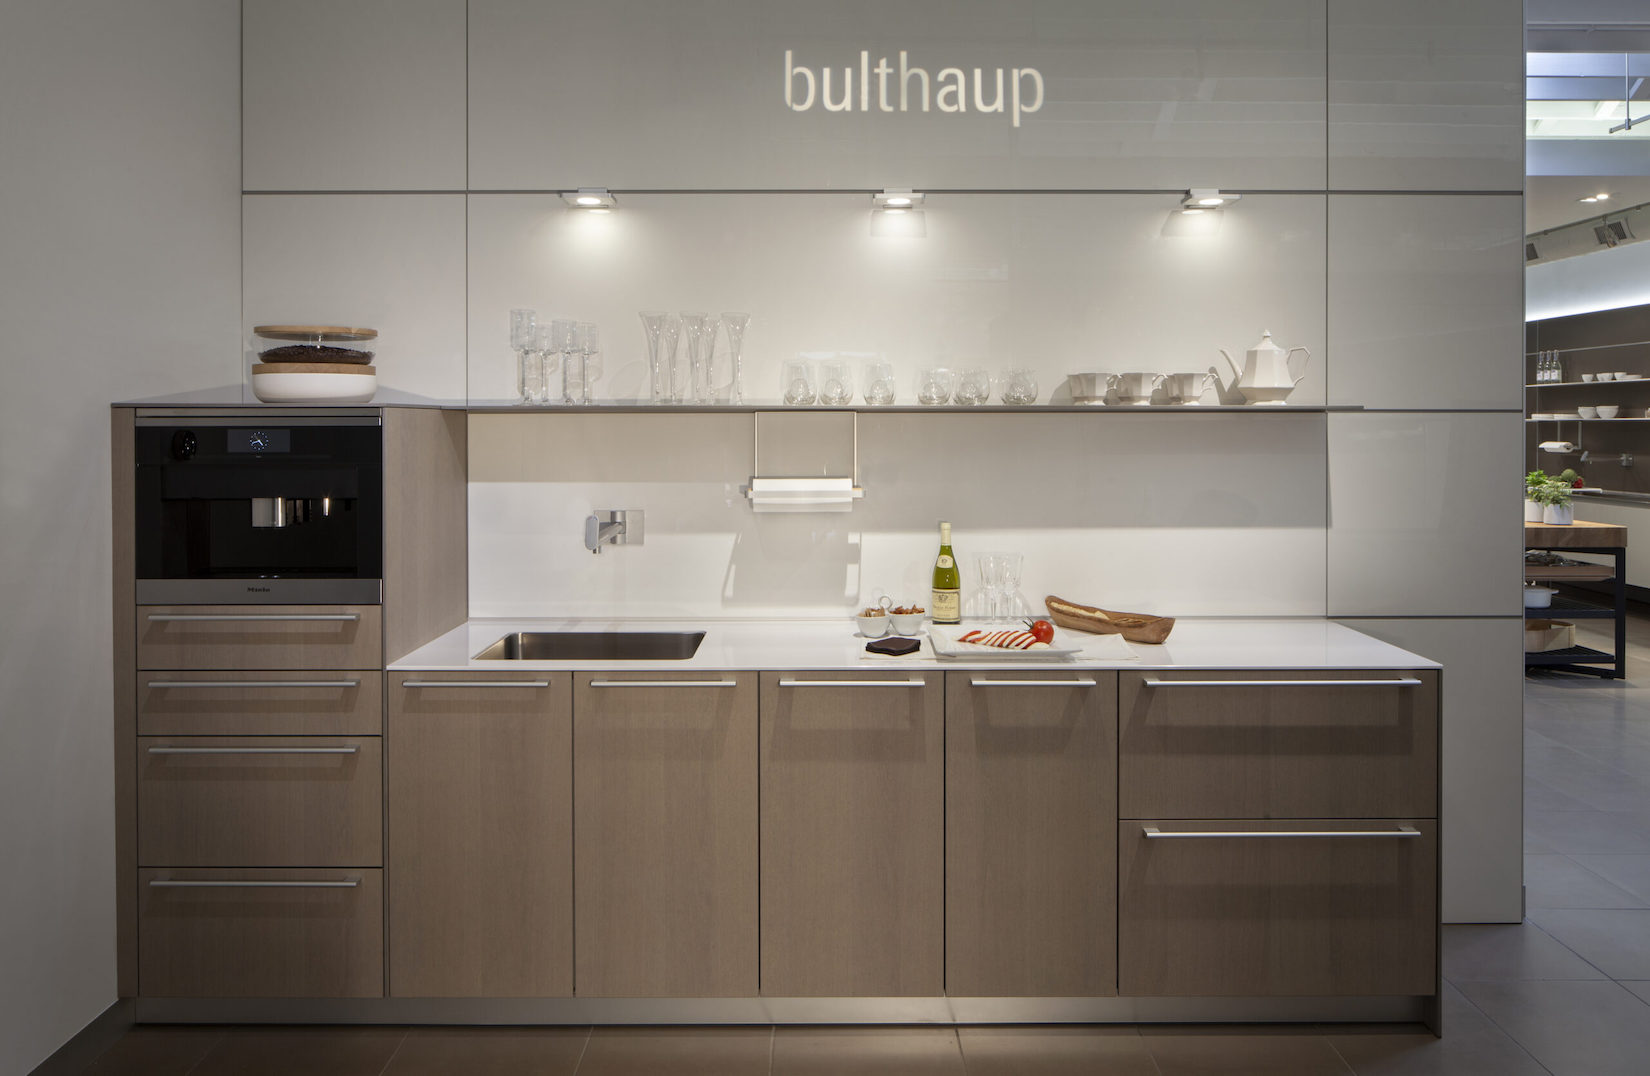 bulthaup kitchen showroom in denver